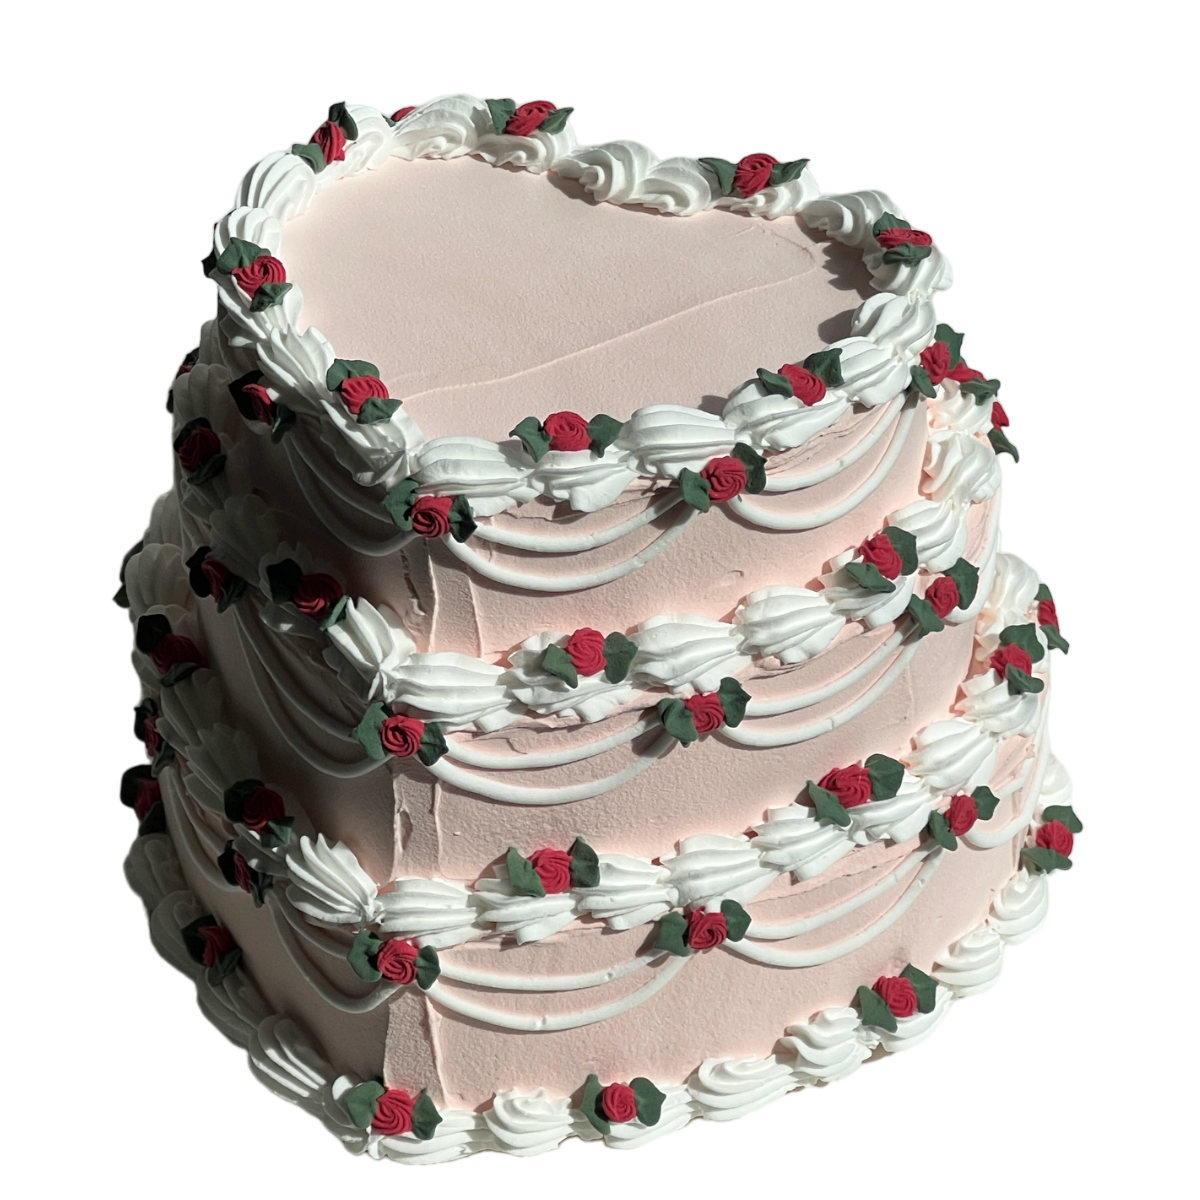 Cute Cakes - Picture of Cute Cakes Bakery & Café, Escondido - Tripadvisor